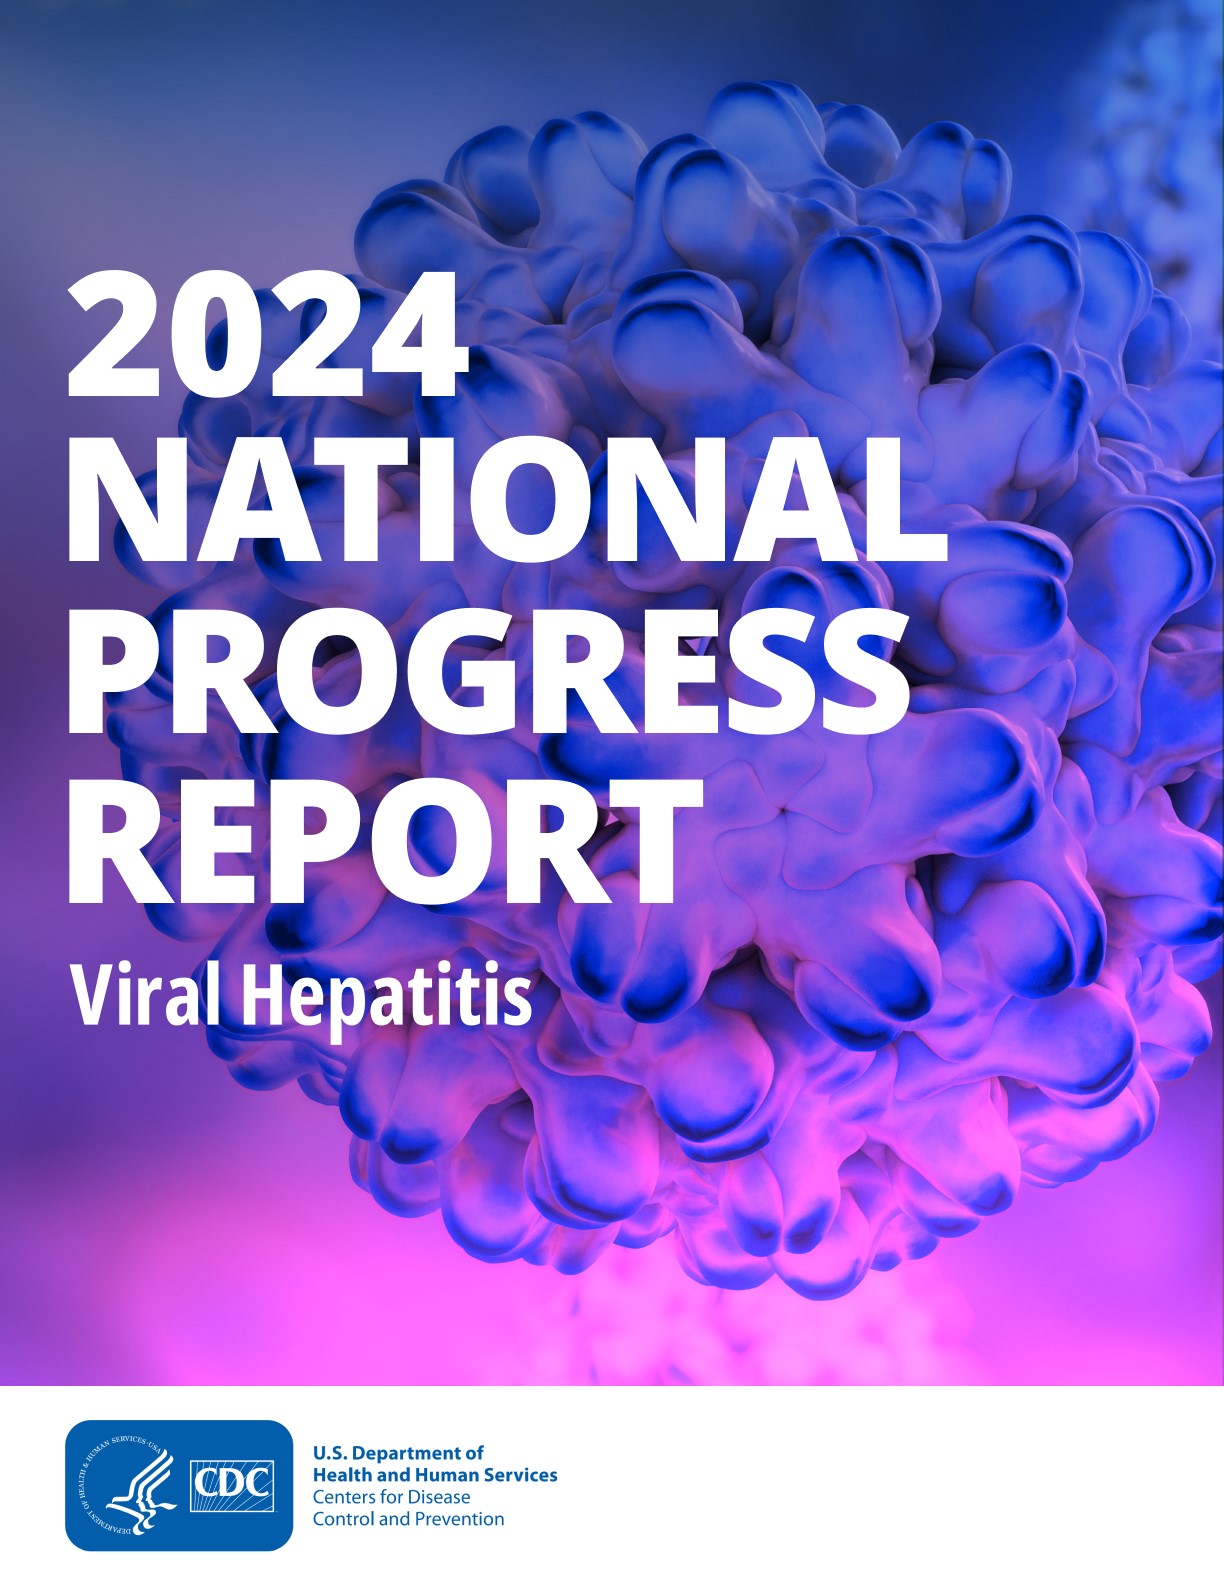 Graphic for 2024 National Progress Report for Viral Hepatitis